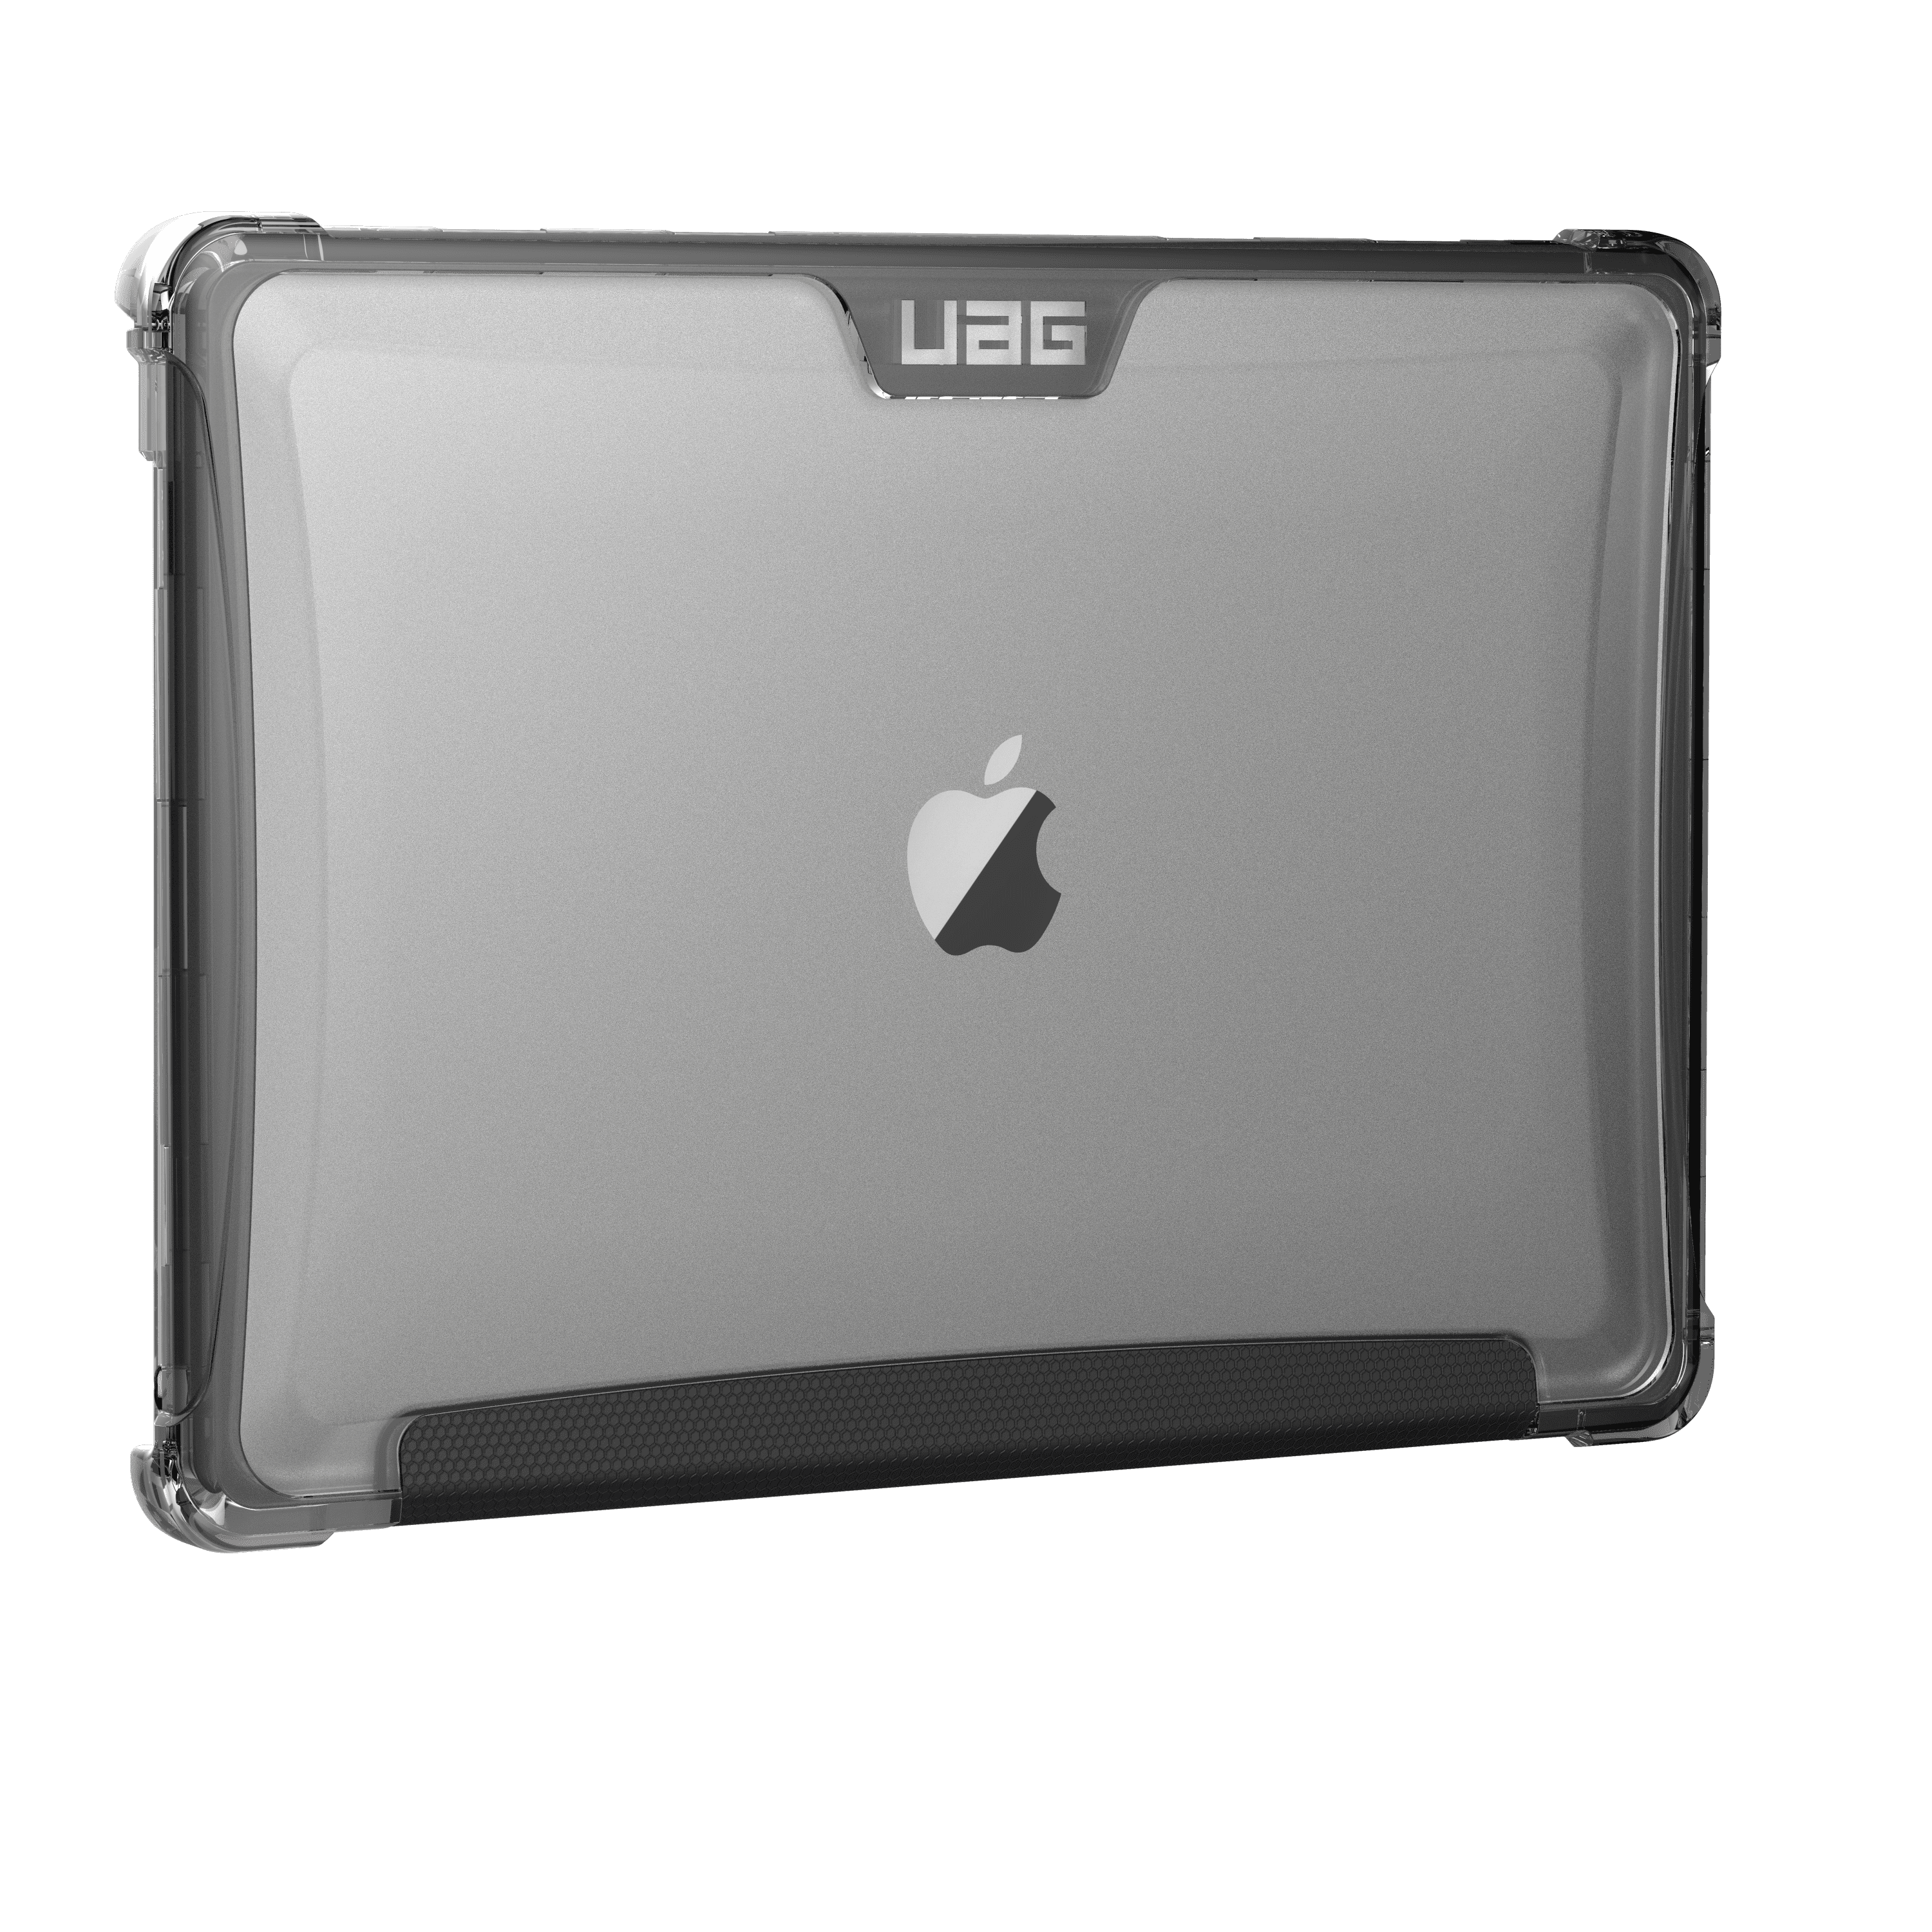 Rubberized Thin Hard Case Cover For Macbook Air Pro 121315 Unique Camo  Pattern